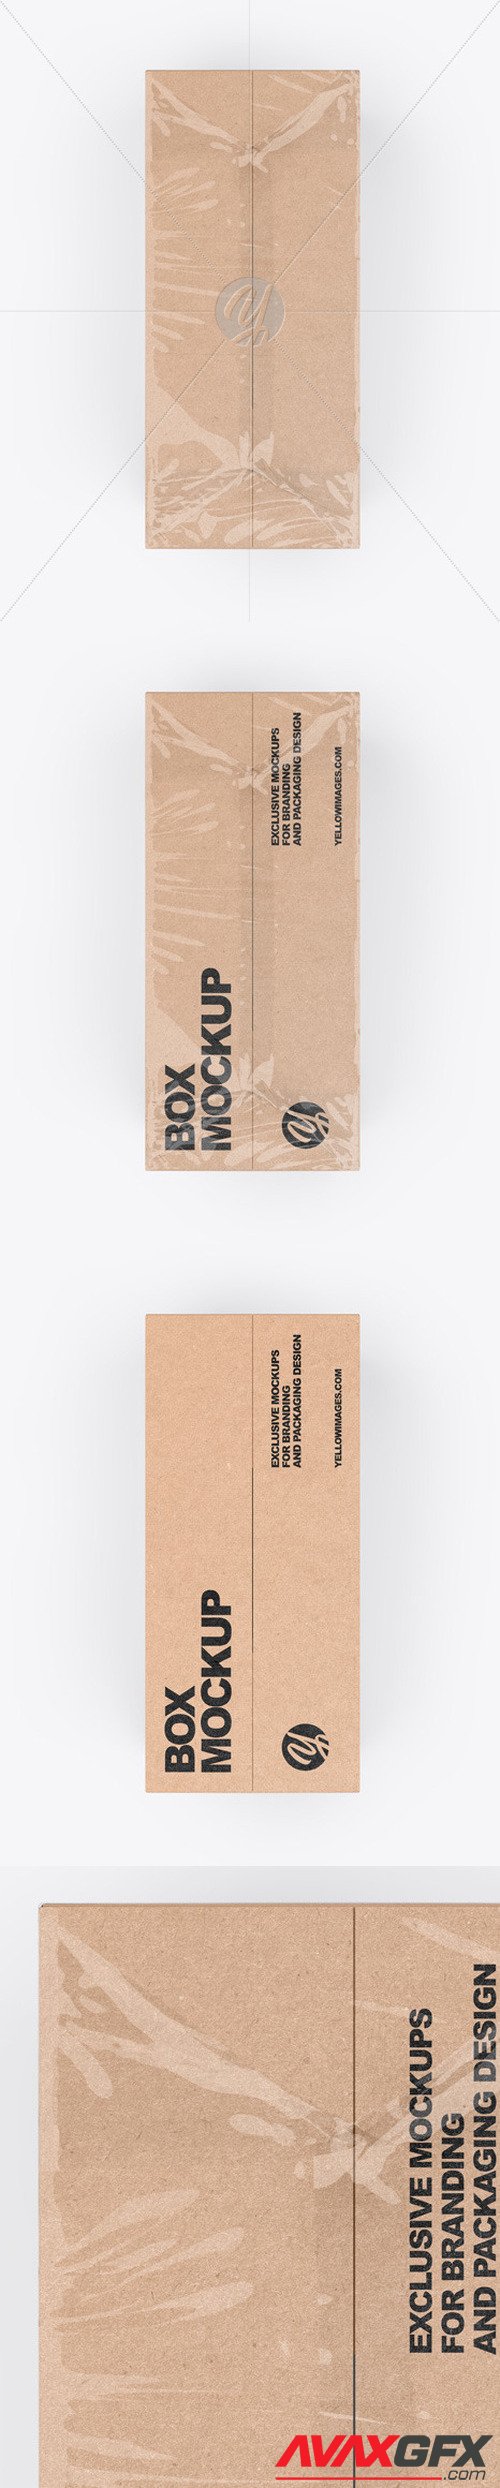 Kraft Box Mockup 50464 [TIF]